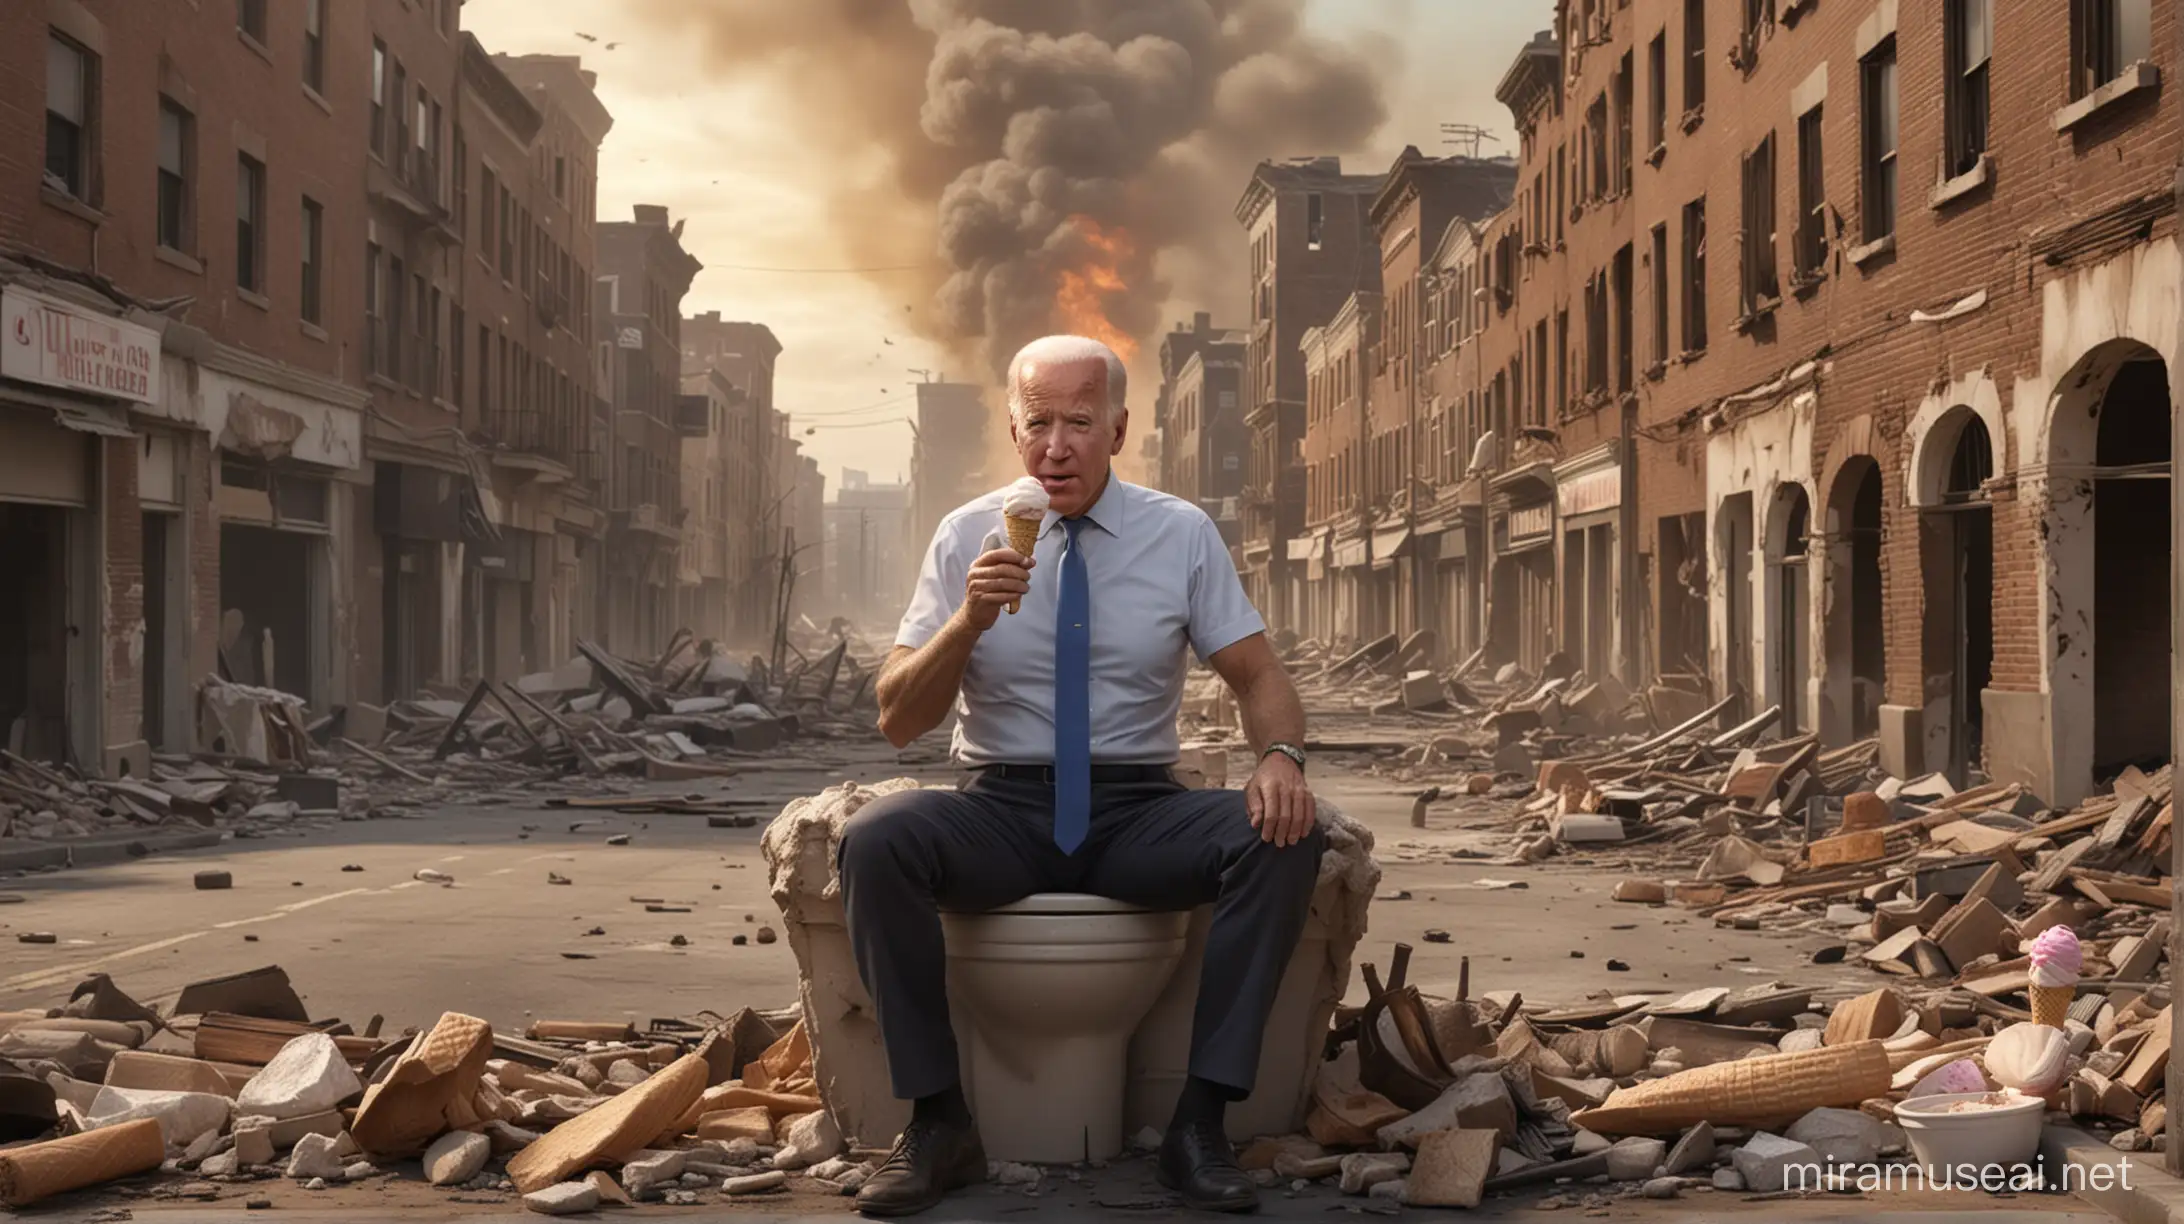 Joe Biden Eating Ice Cream on Ruined Street Amidst City Devastation